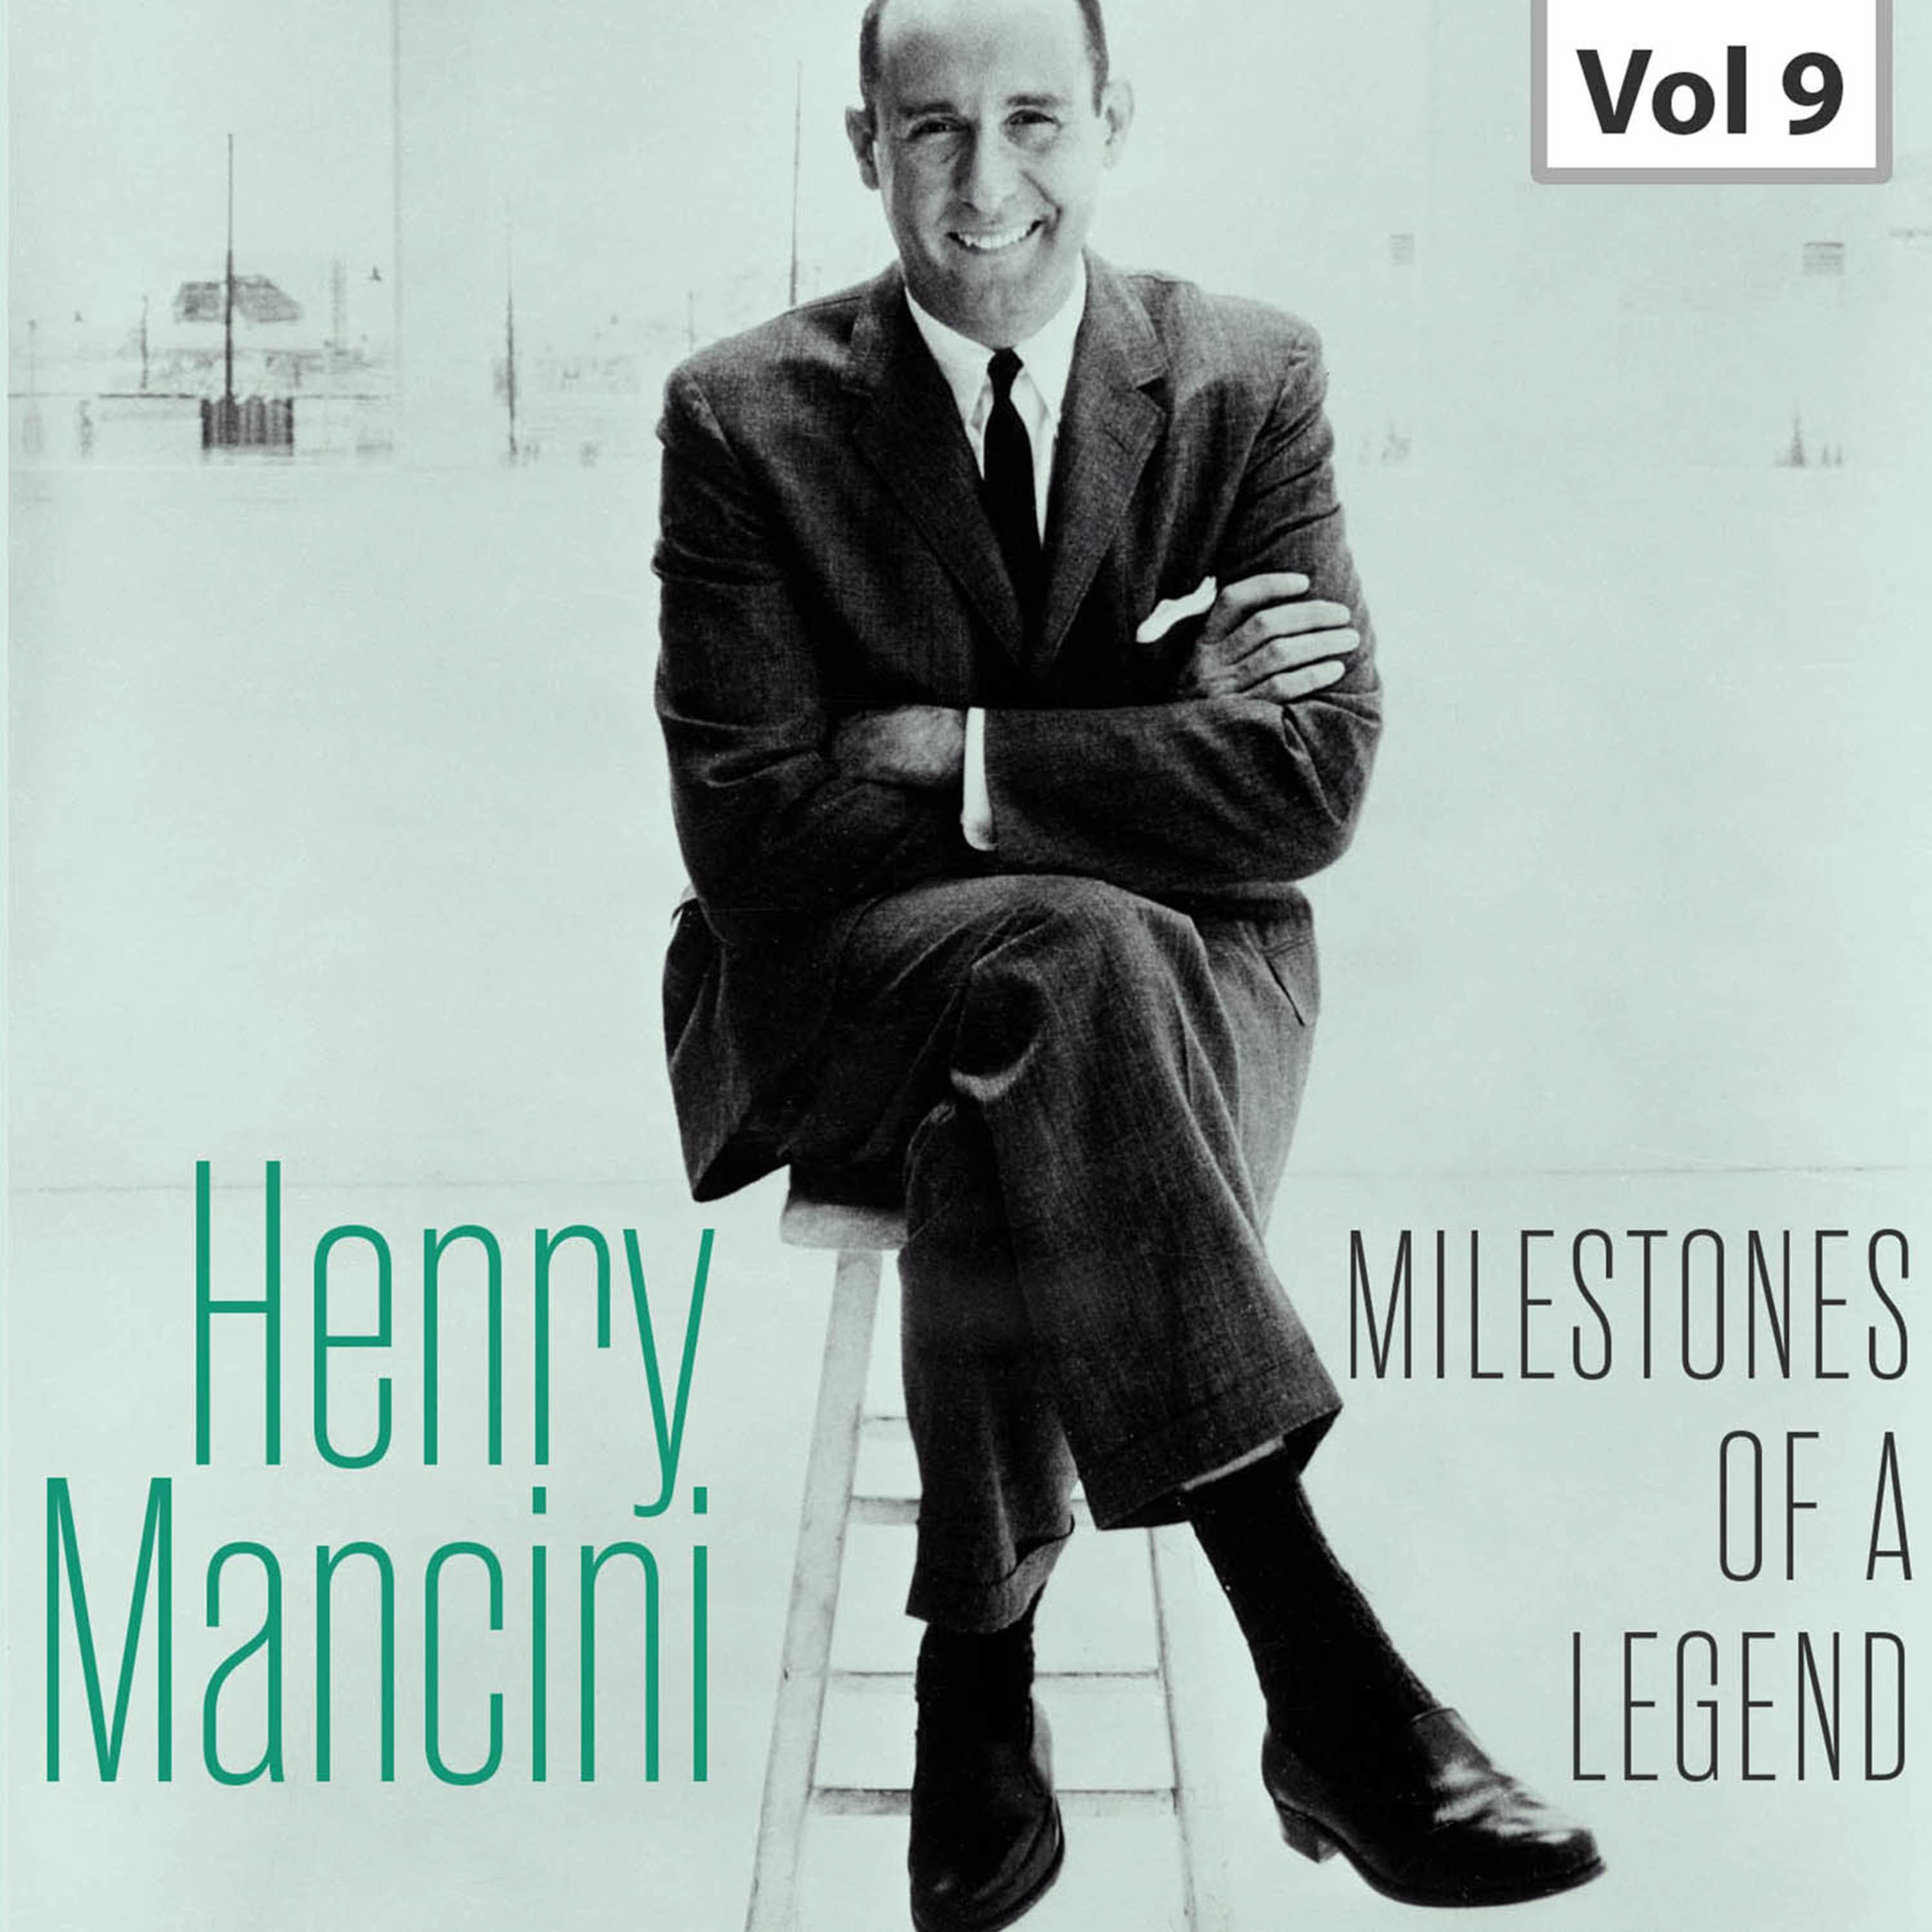 Milestones of a Legend - Henry Mancini, Vol. 9